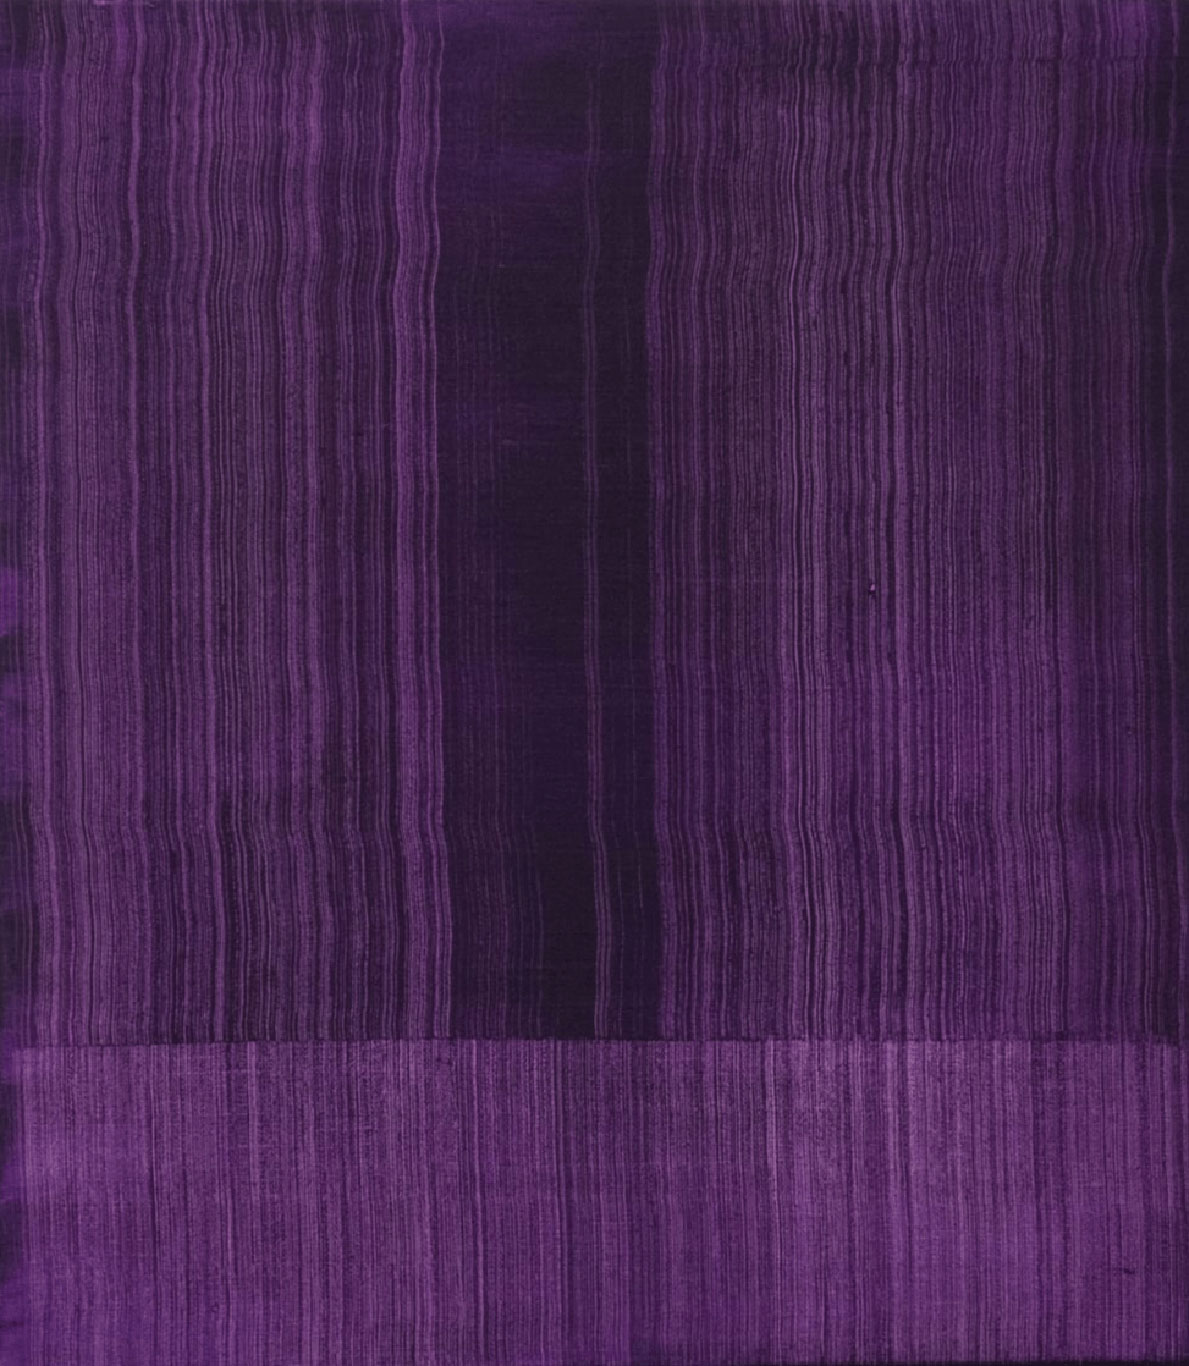 Traces purple 1